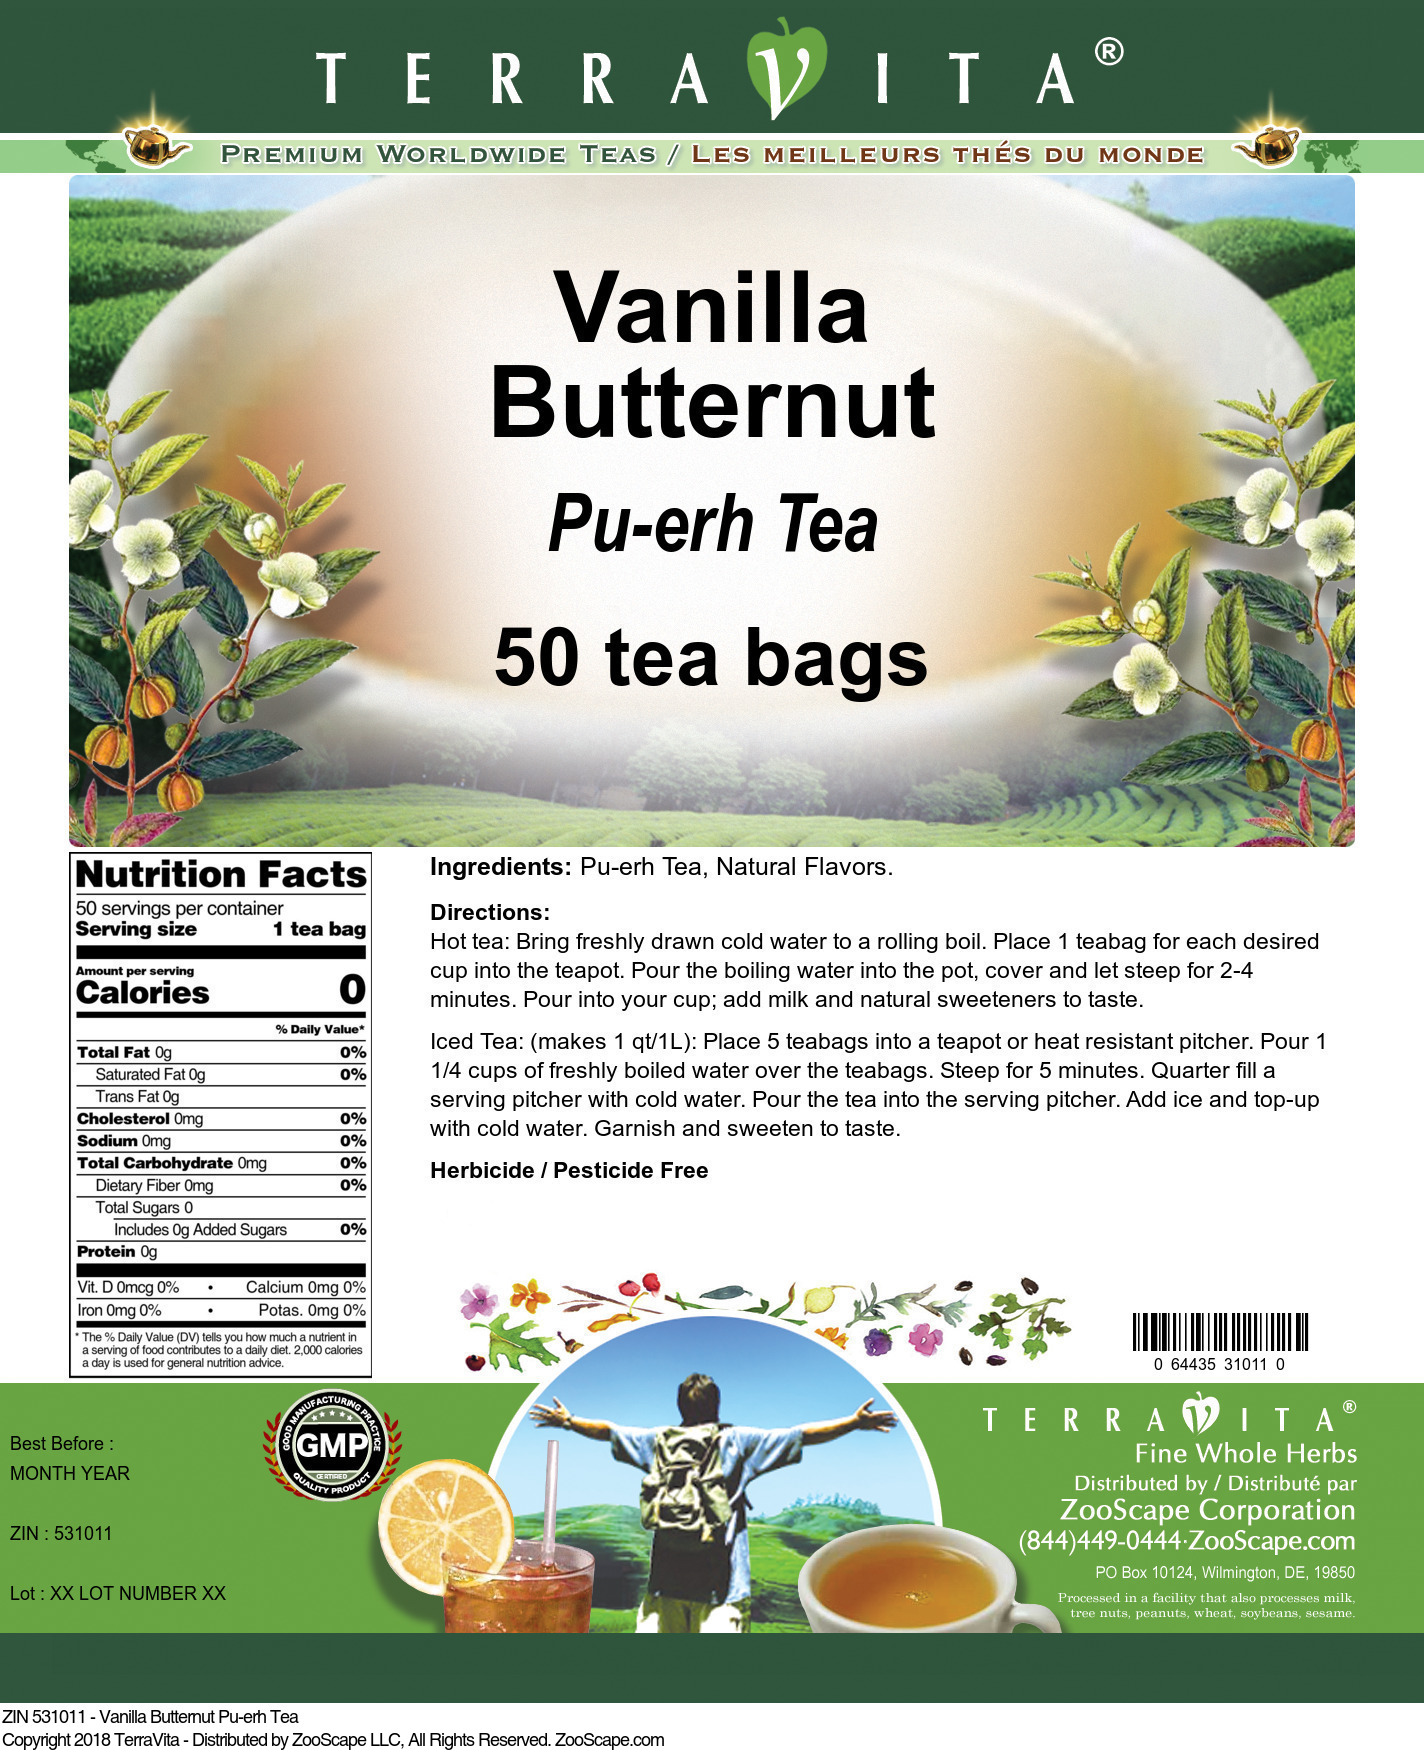 Vanilla Butternut Pu-erh Tea - Label